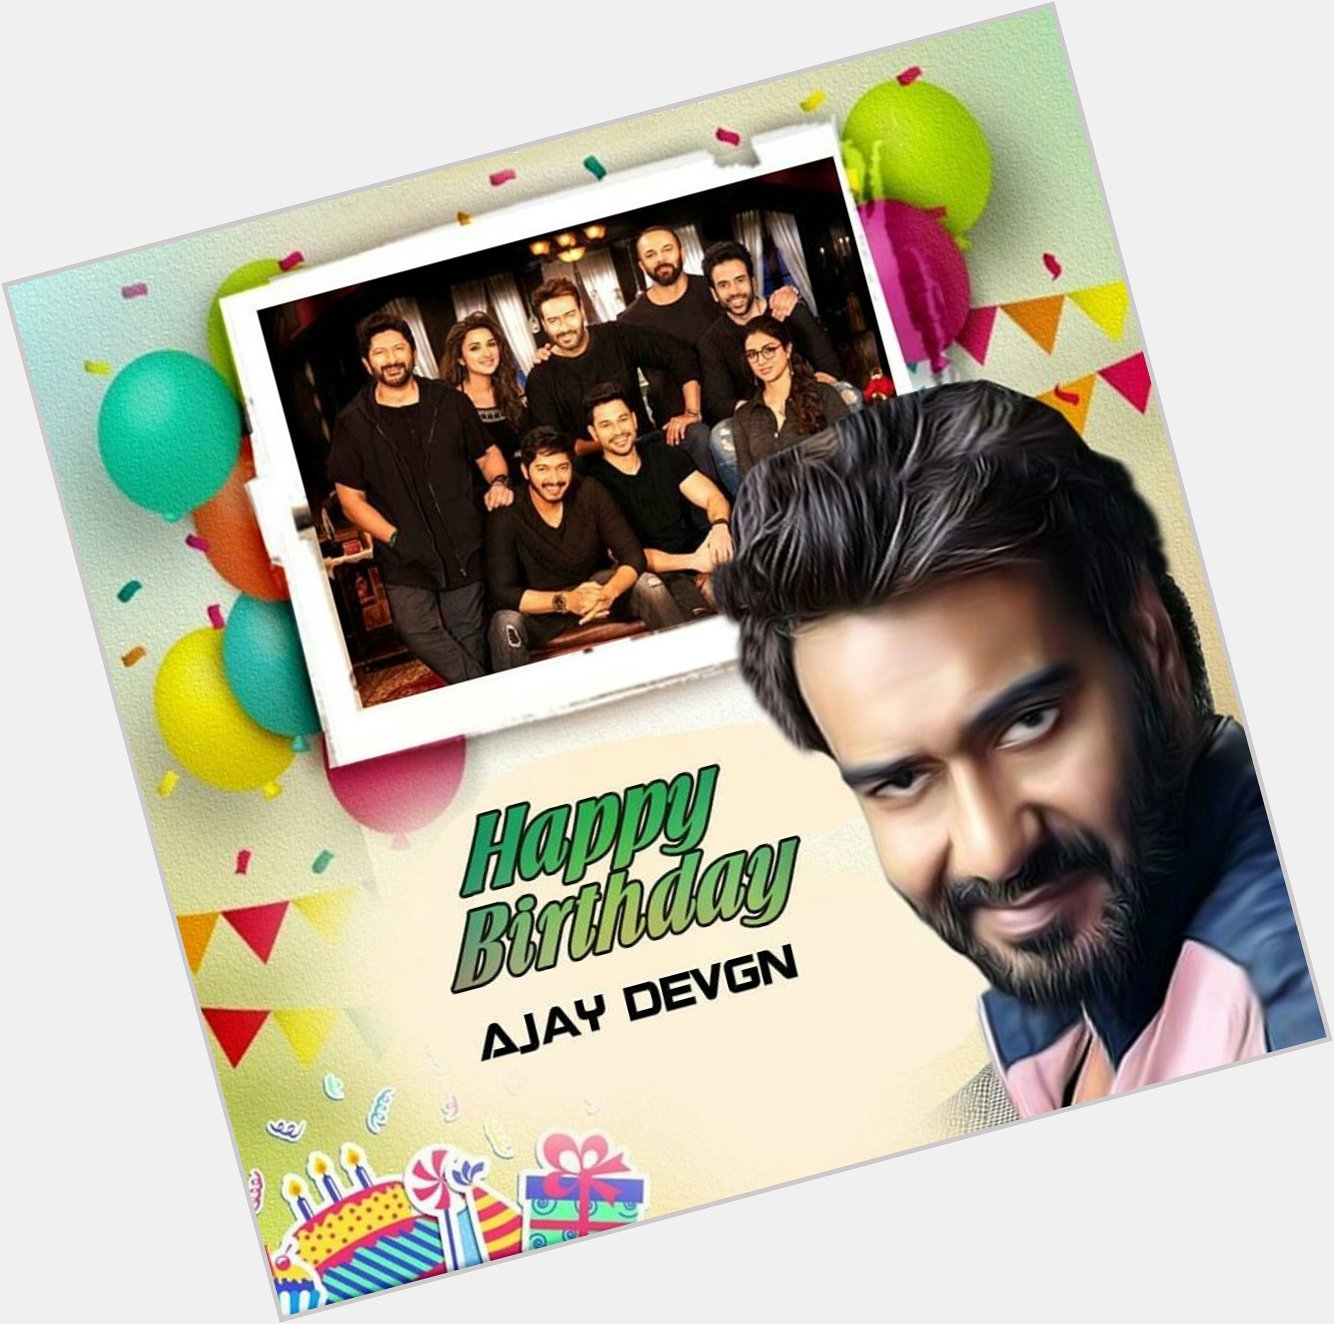 Wish you a very Happy Birthday Ajay Devgn sir     